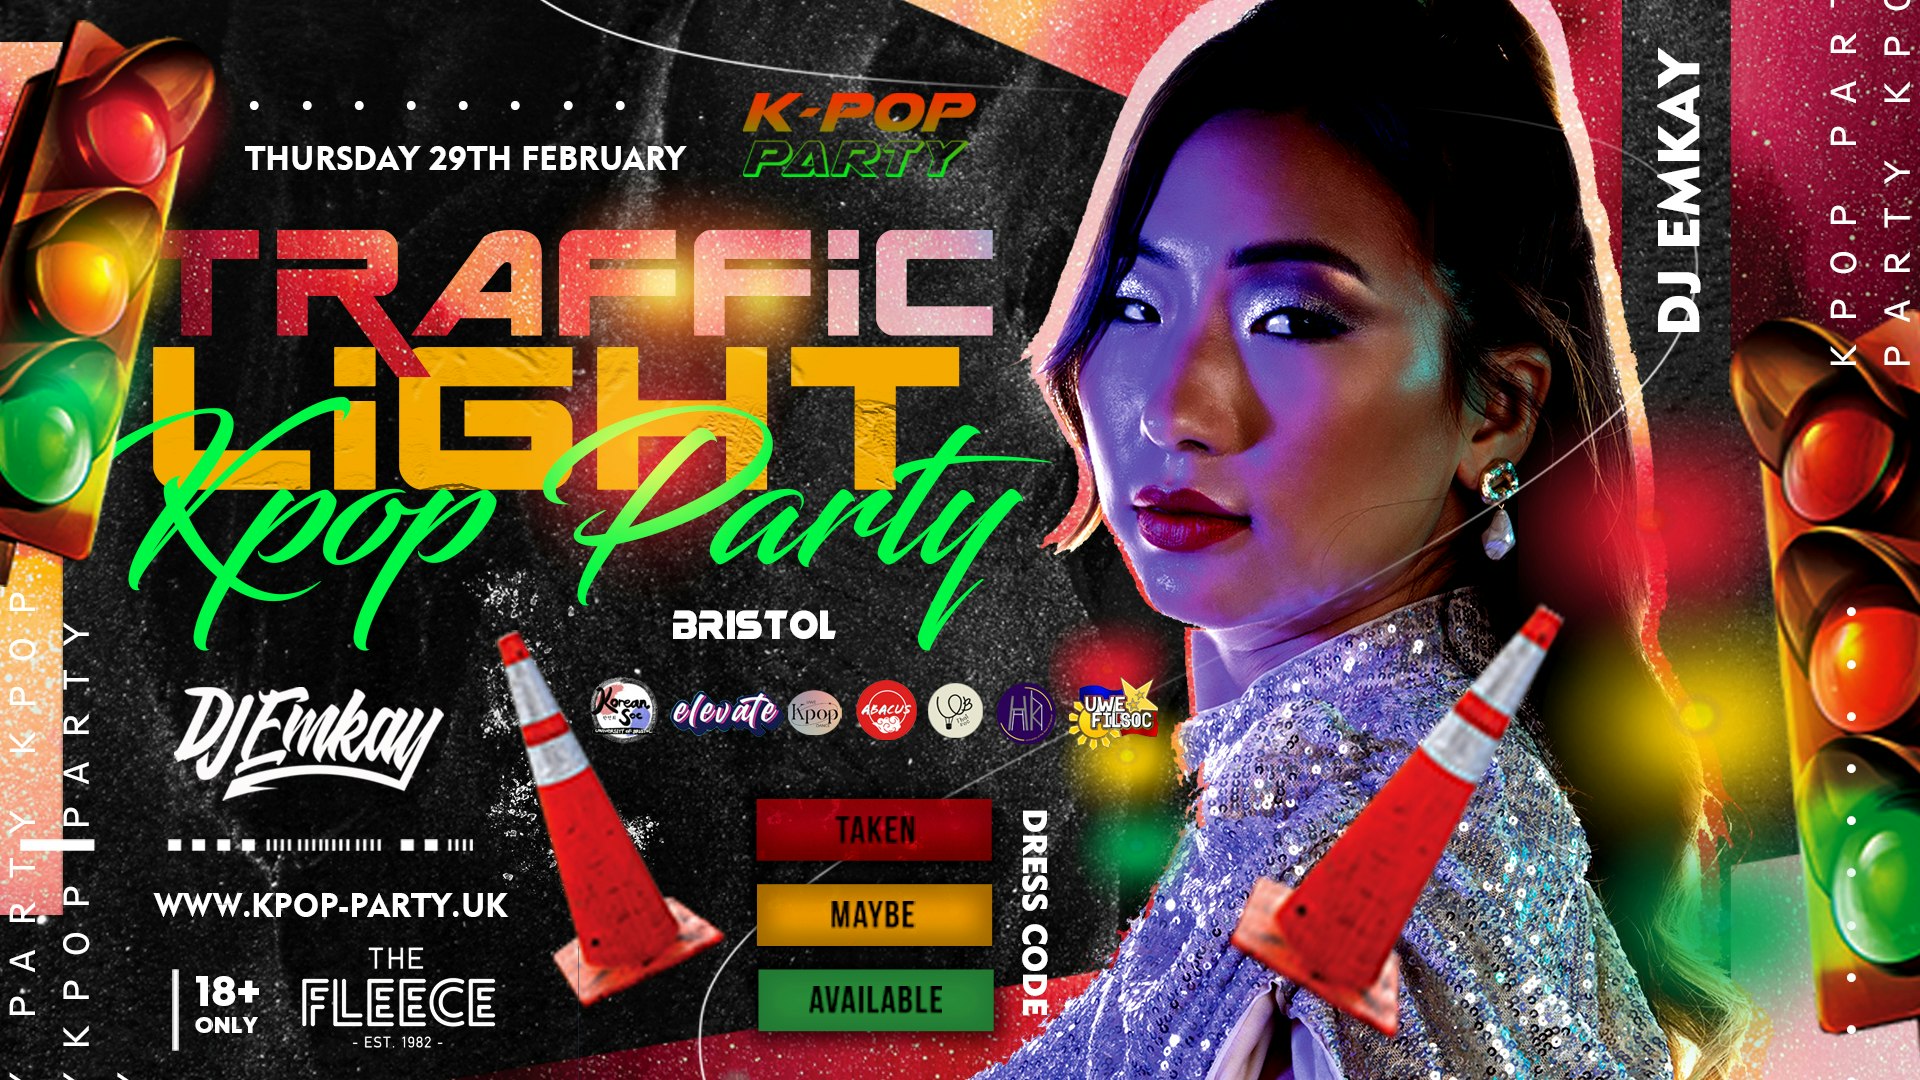 K-Pop TRAFFIC LIGHT Party Bristol with DJ EMKAY | Thursday 29th February